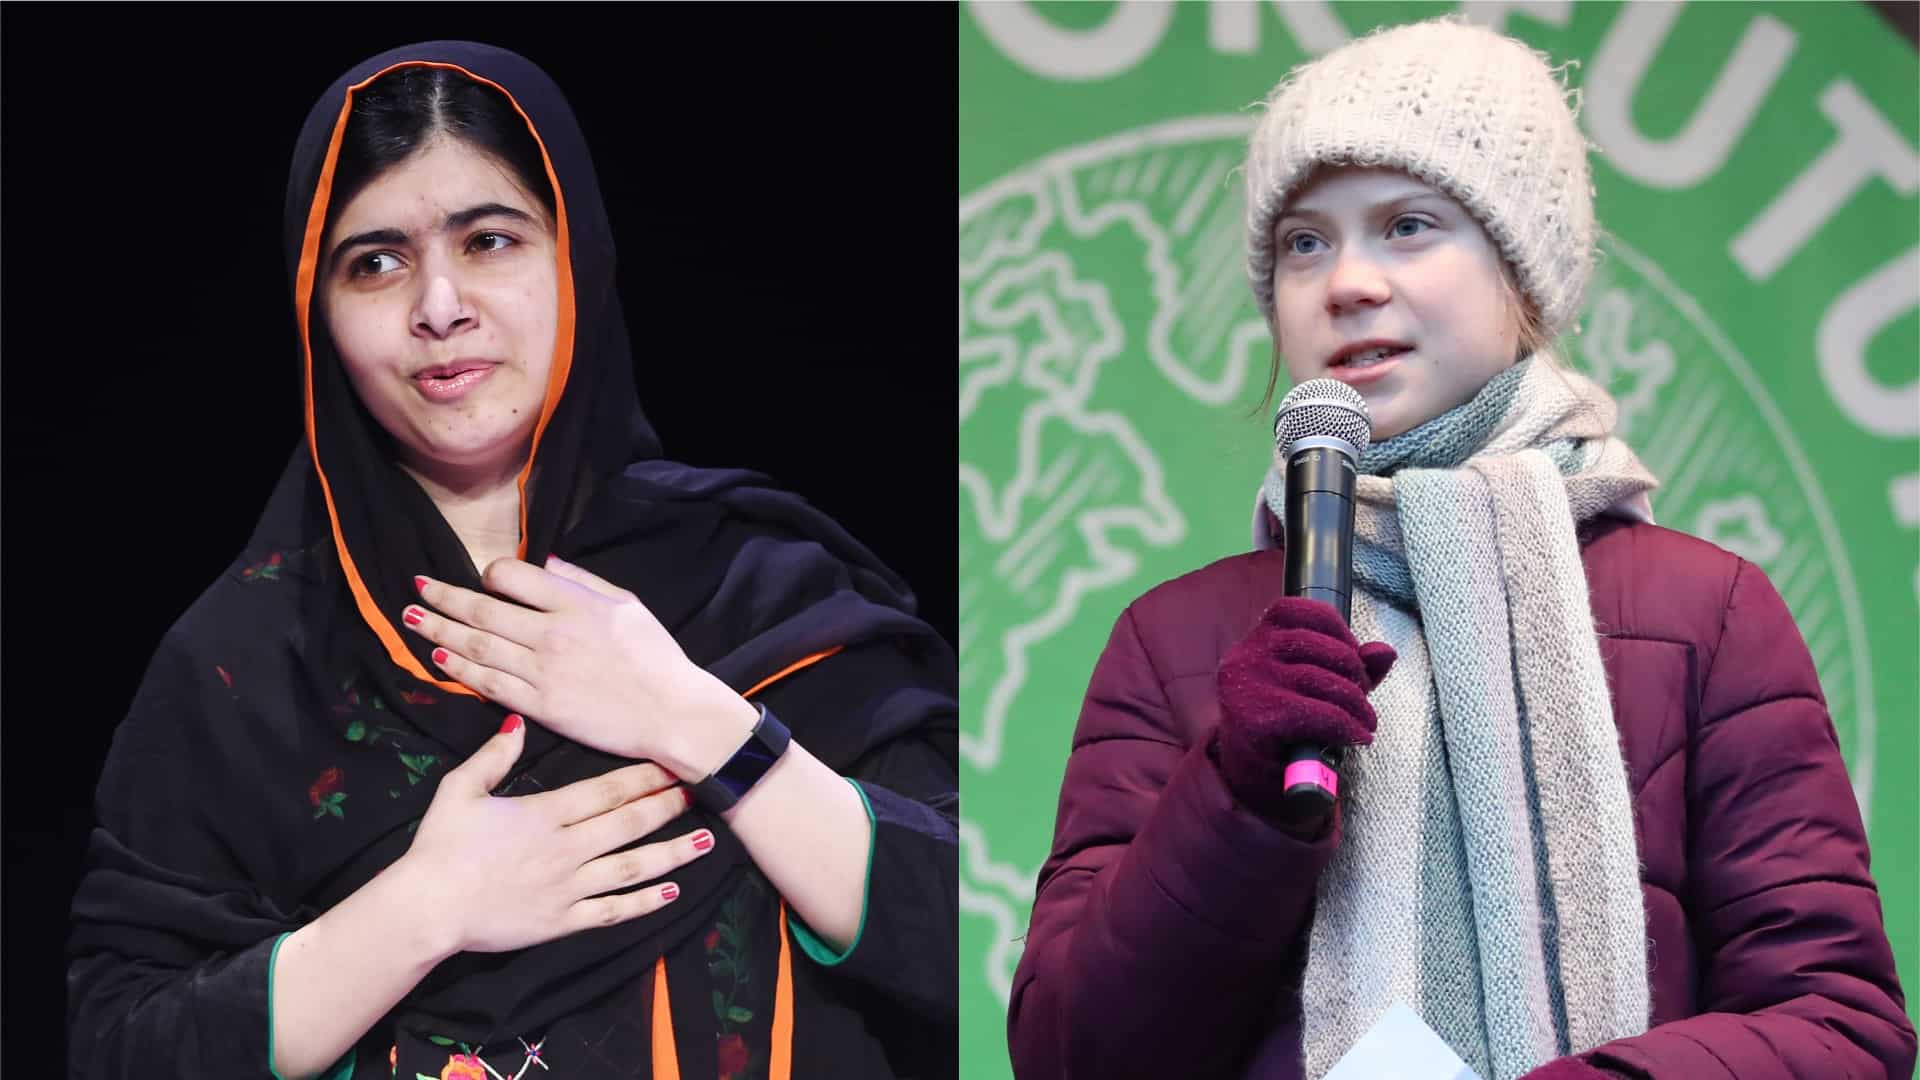 Greta Thunberg meets ‘role model’ Malala Yousafzai in Oxford